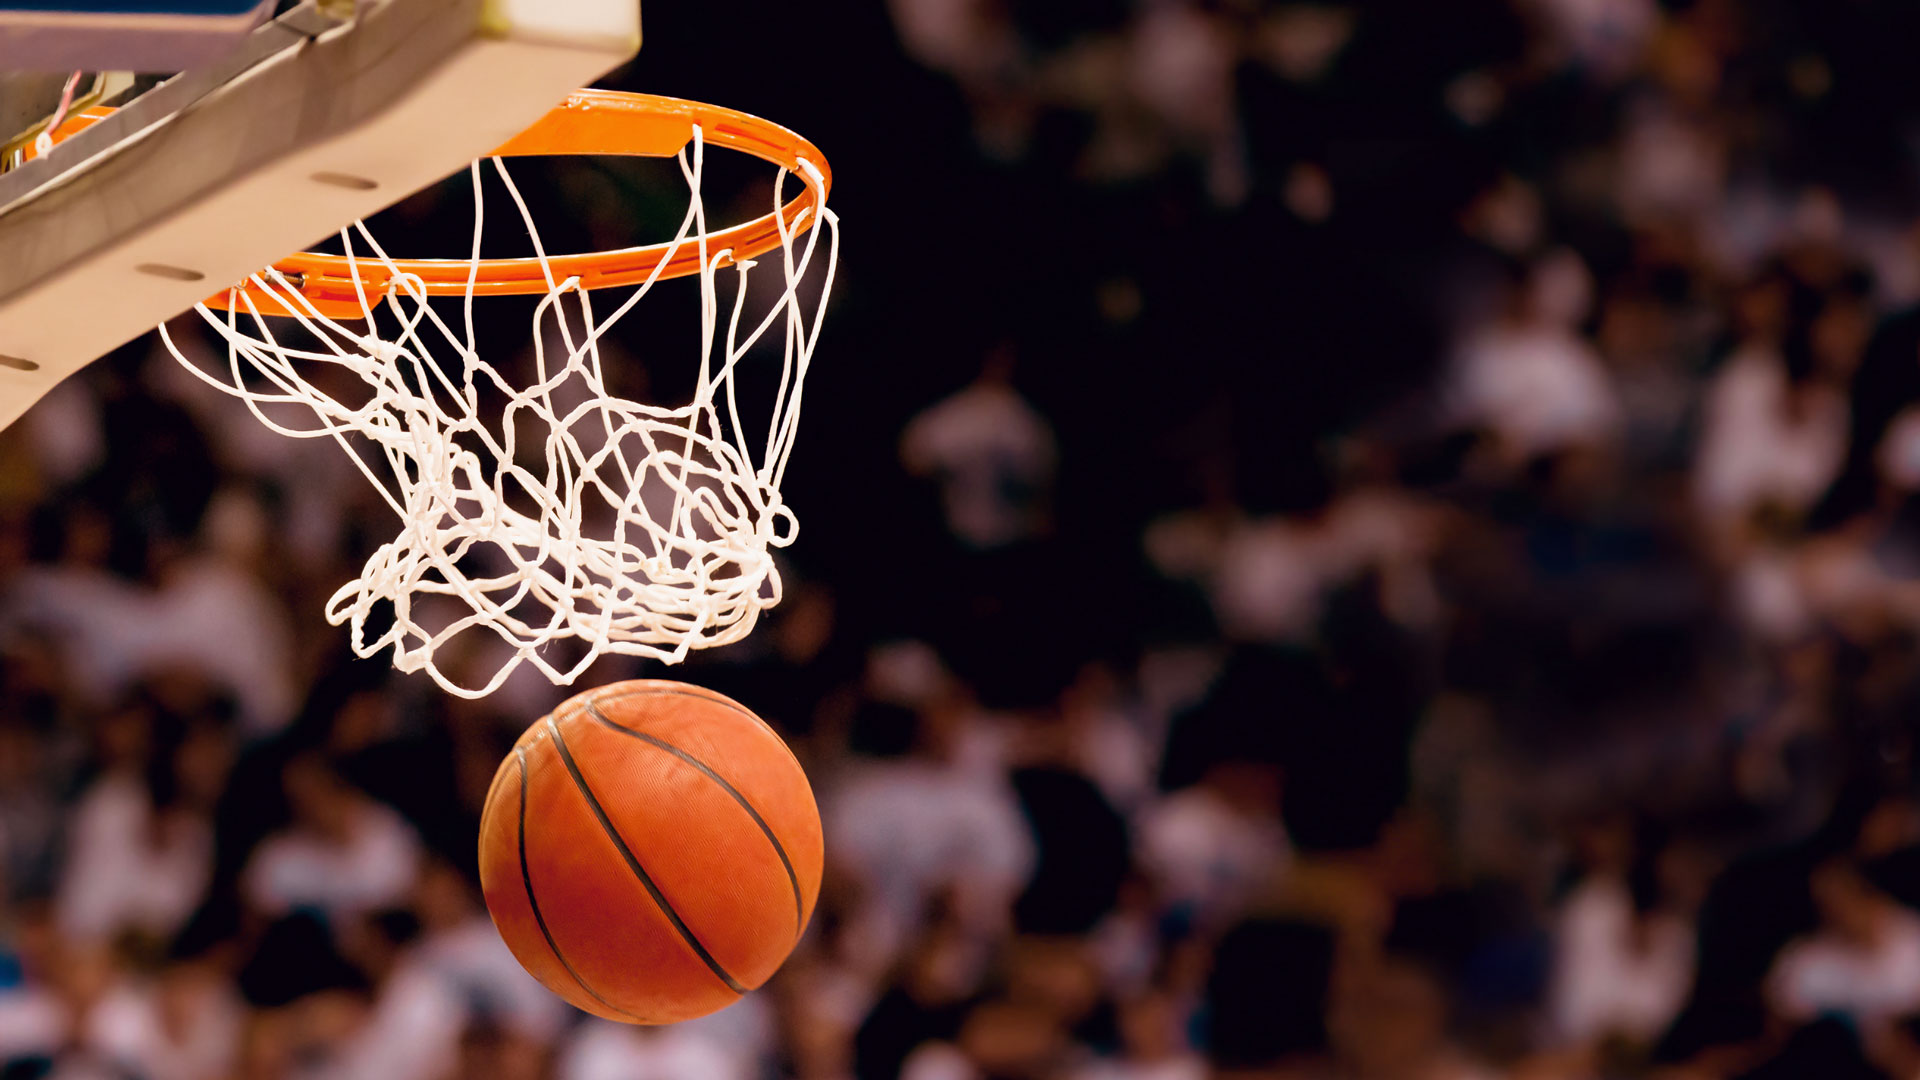 A basketball goes through a hoop.